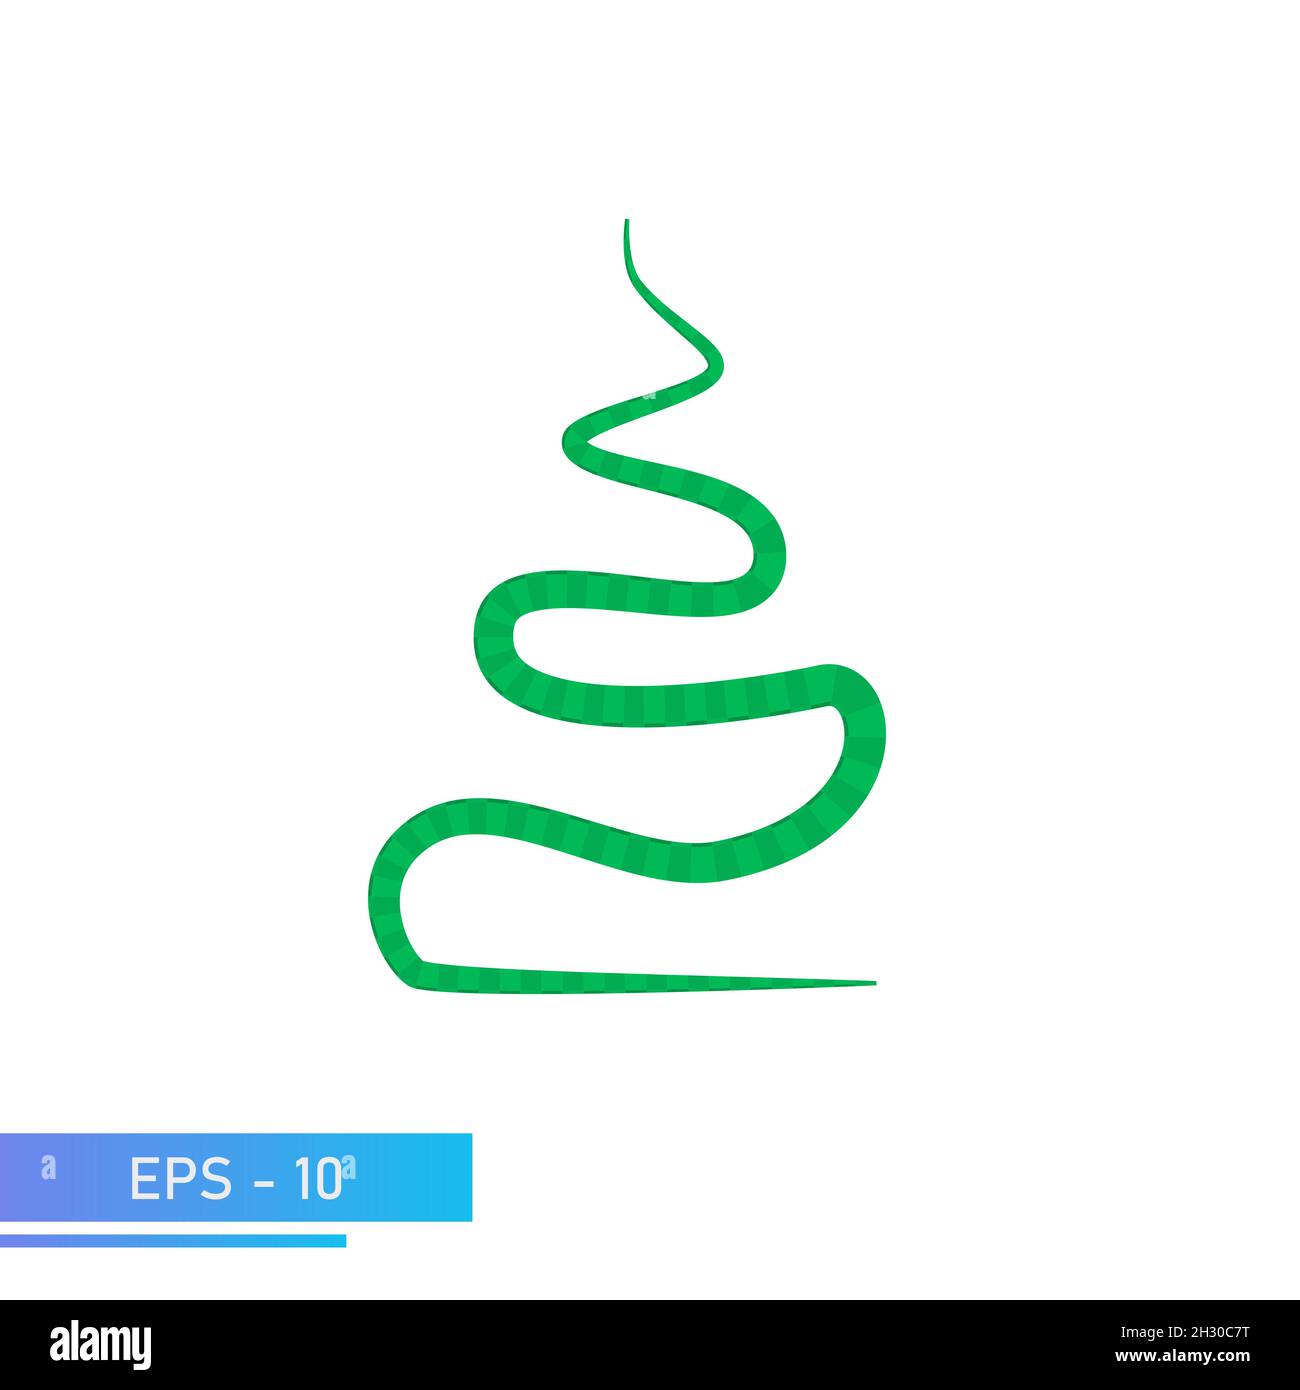 Moderner weihnachtsbaum in grüner Farbe. Schlangenform. Pixelgrün. Moderne Illustration. Flache Vektorgrafik. Stock Vektor